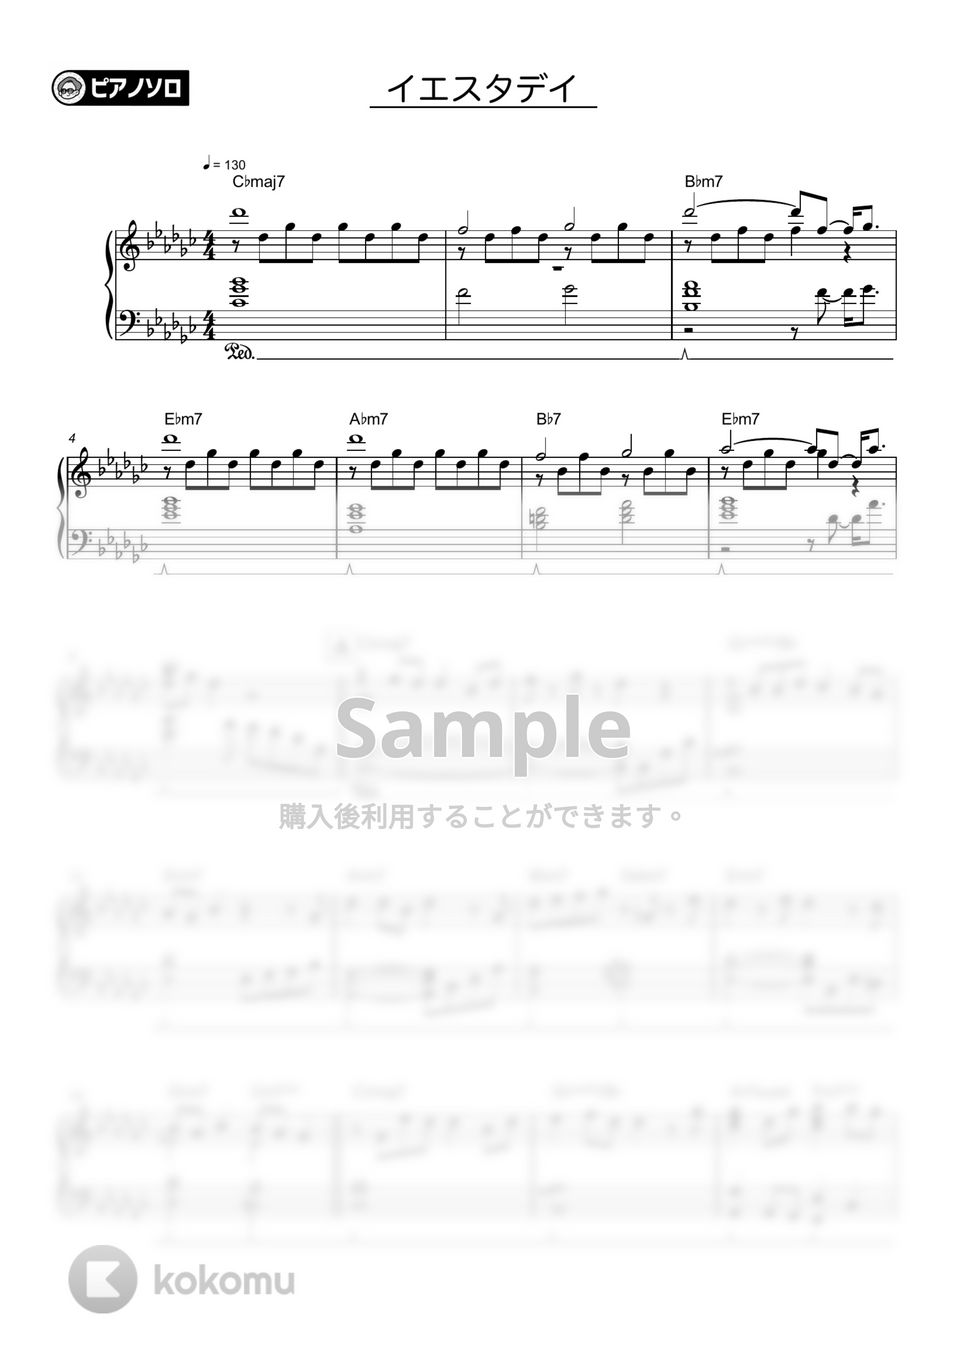 Official髭男dism - イエスタデイ(上級ver.) by シータピアノ